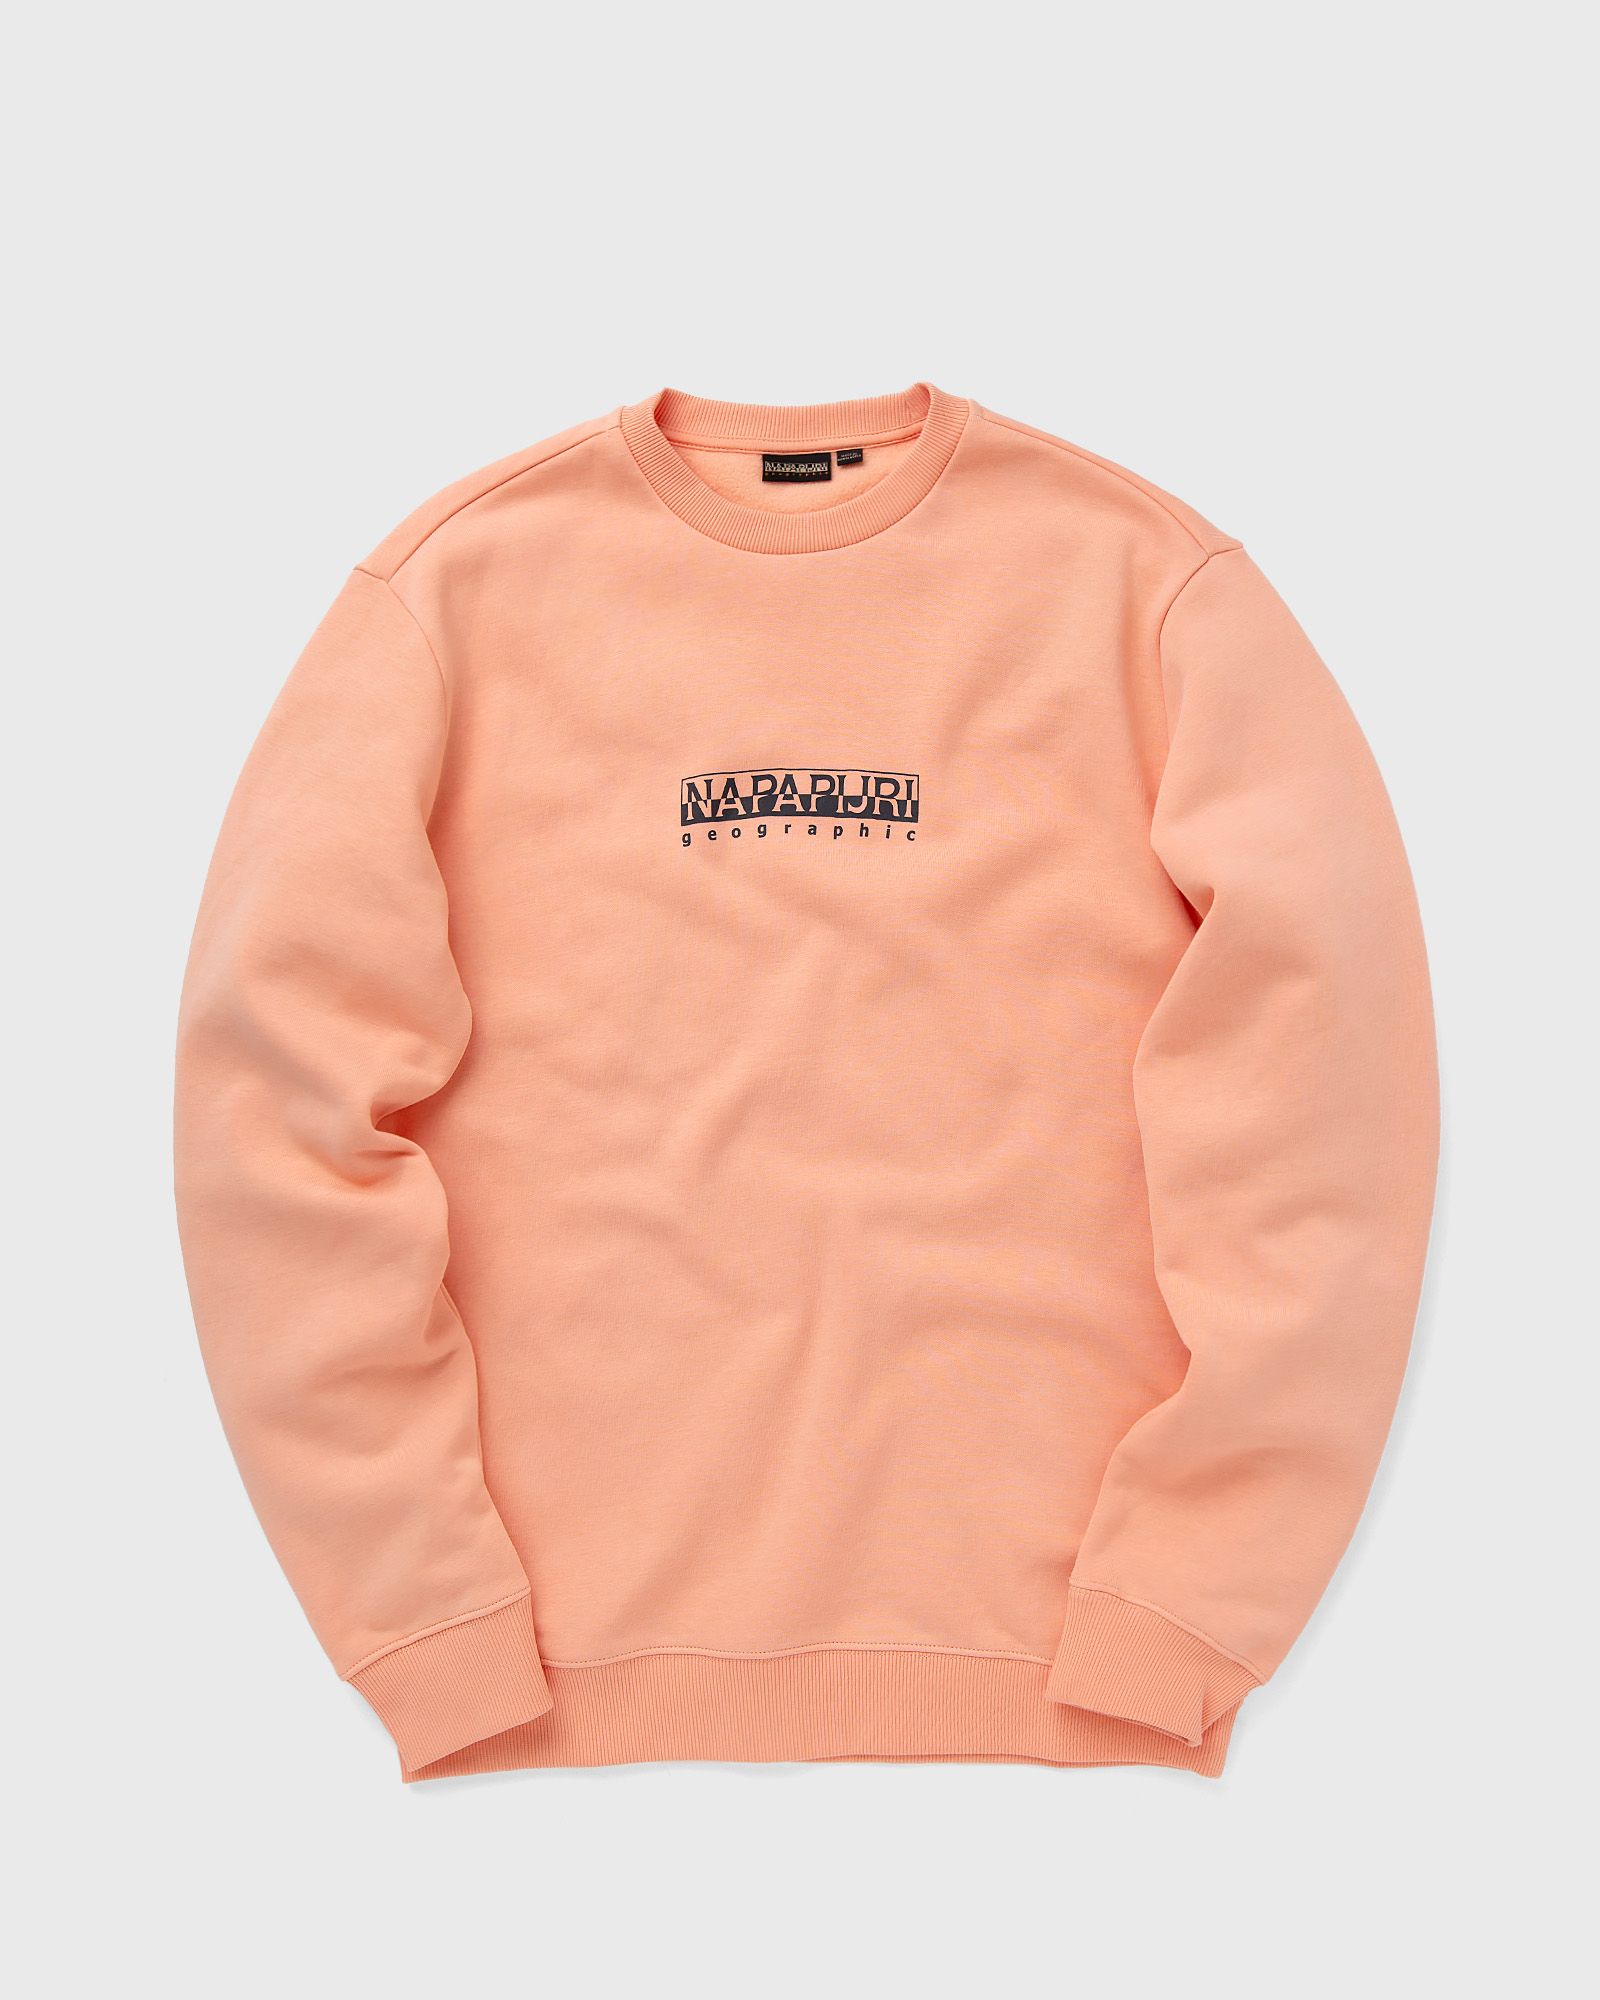 Napapijri B-BOX C S 1 Sweatshirt men Sweatshirts orange|pink in Größe:L von Napapijri